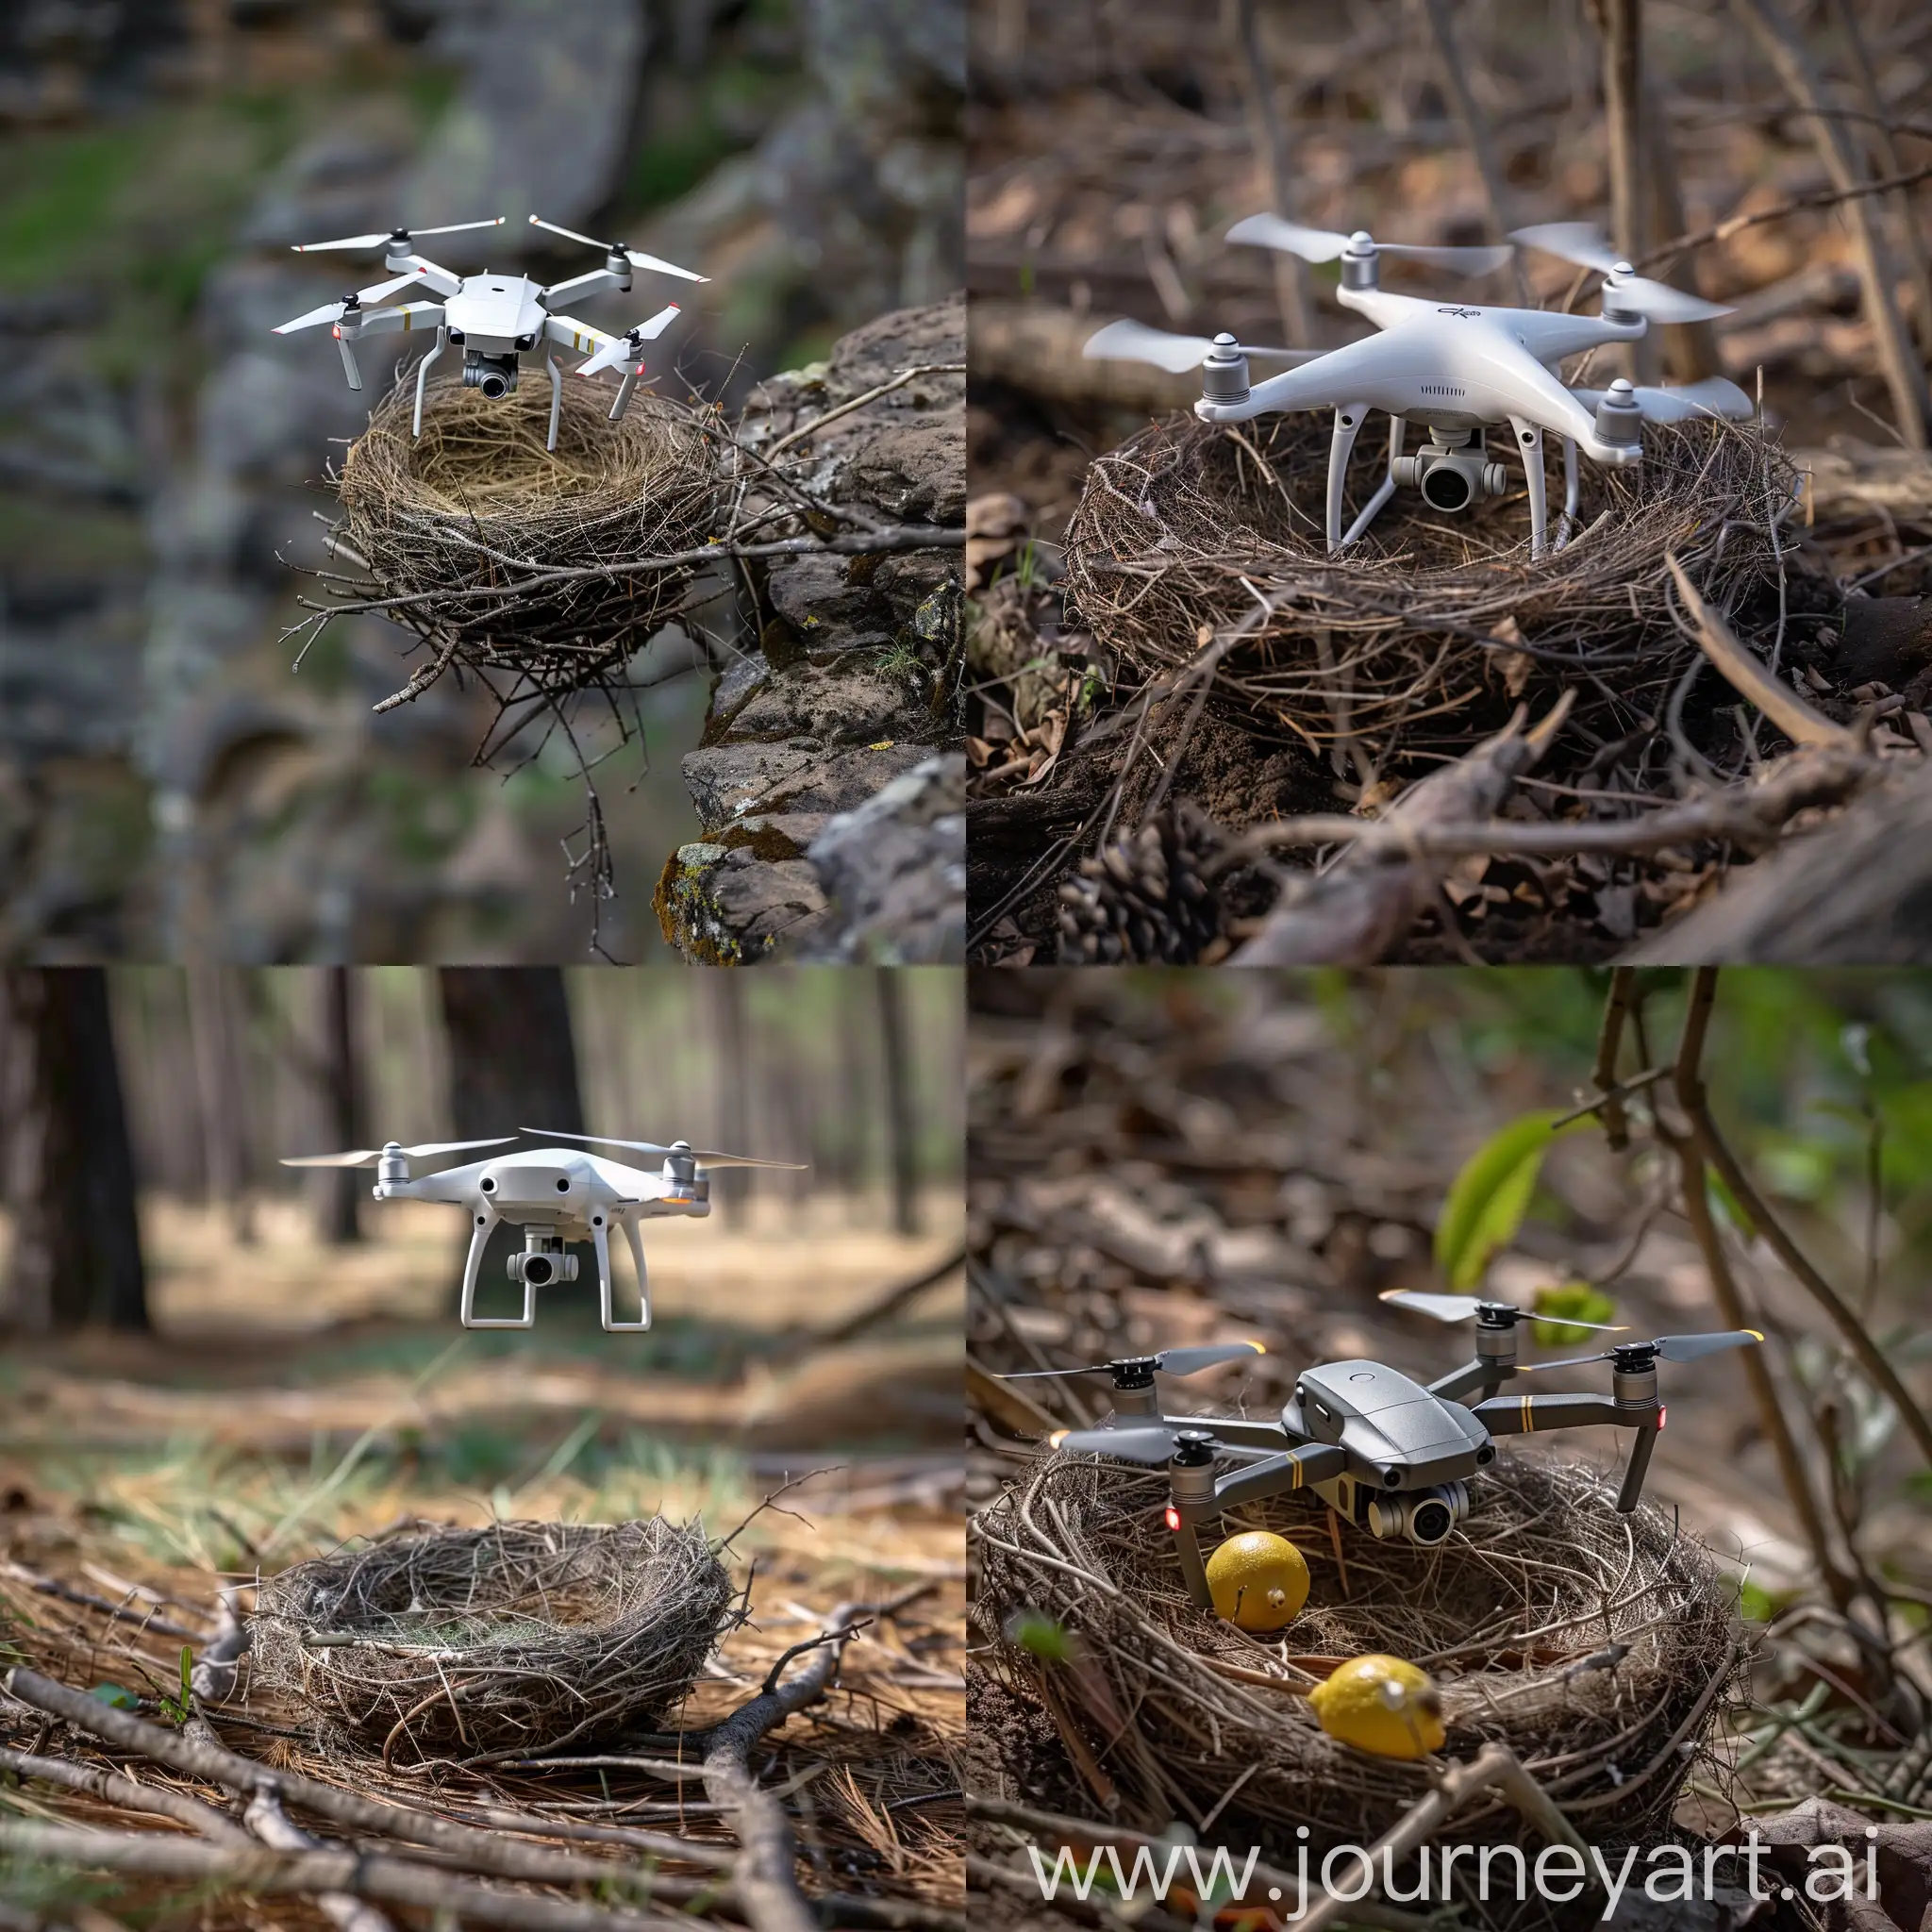 Birds-Nest-with-Drone